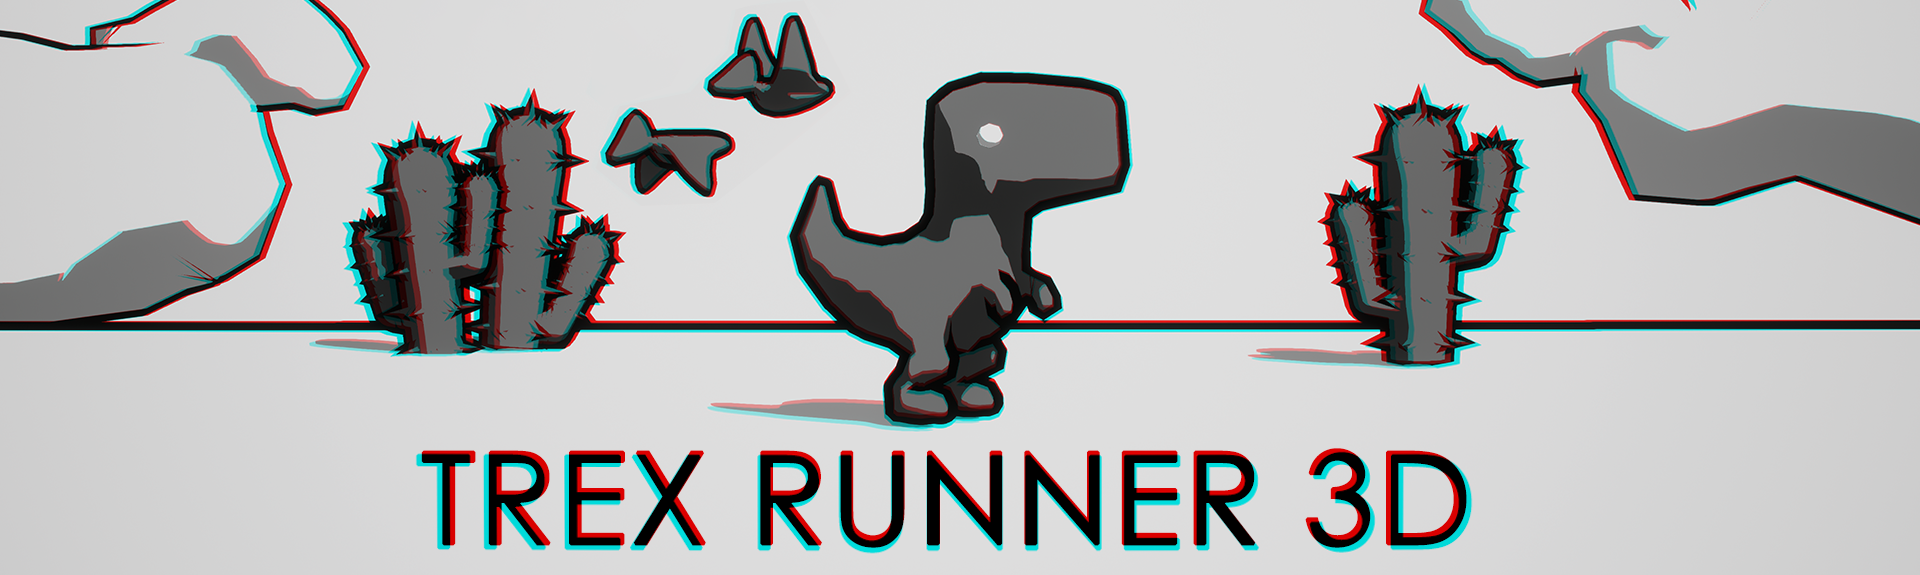 Trex Runner 3D